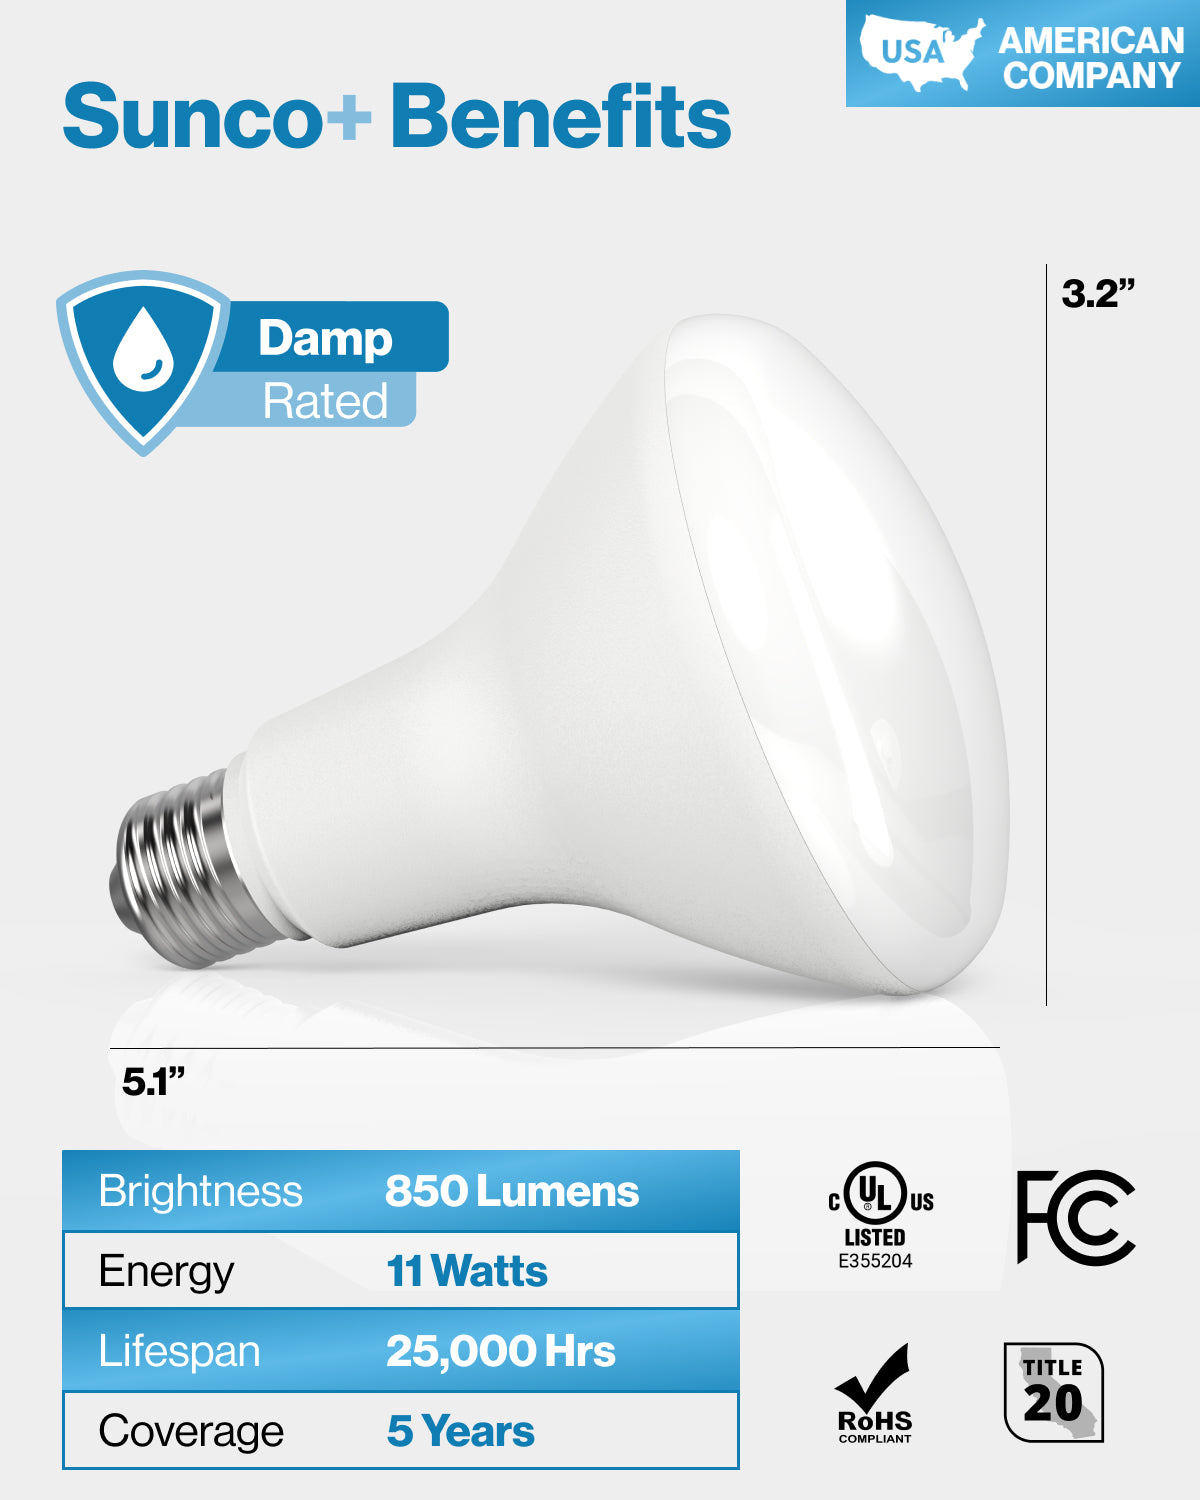 BR30 LED Bulbs LED LIGHTING SUNCO – Sunco Lighting